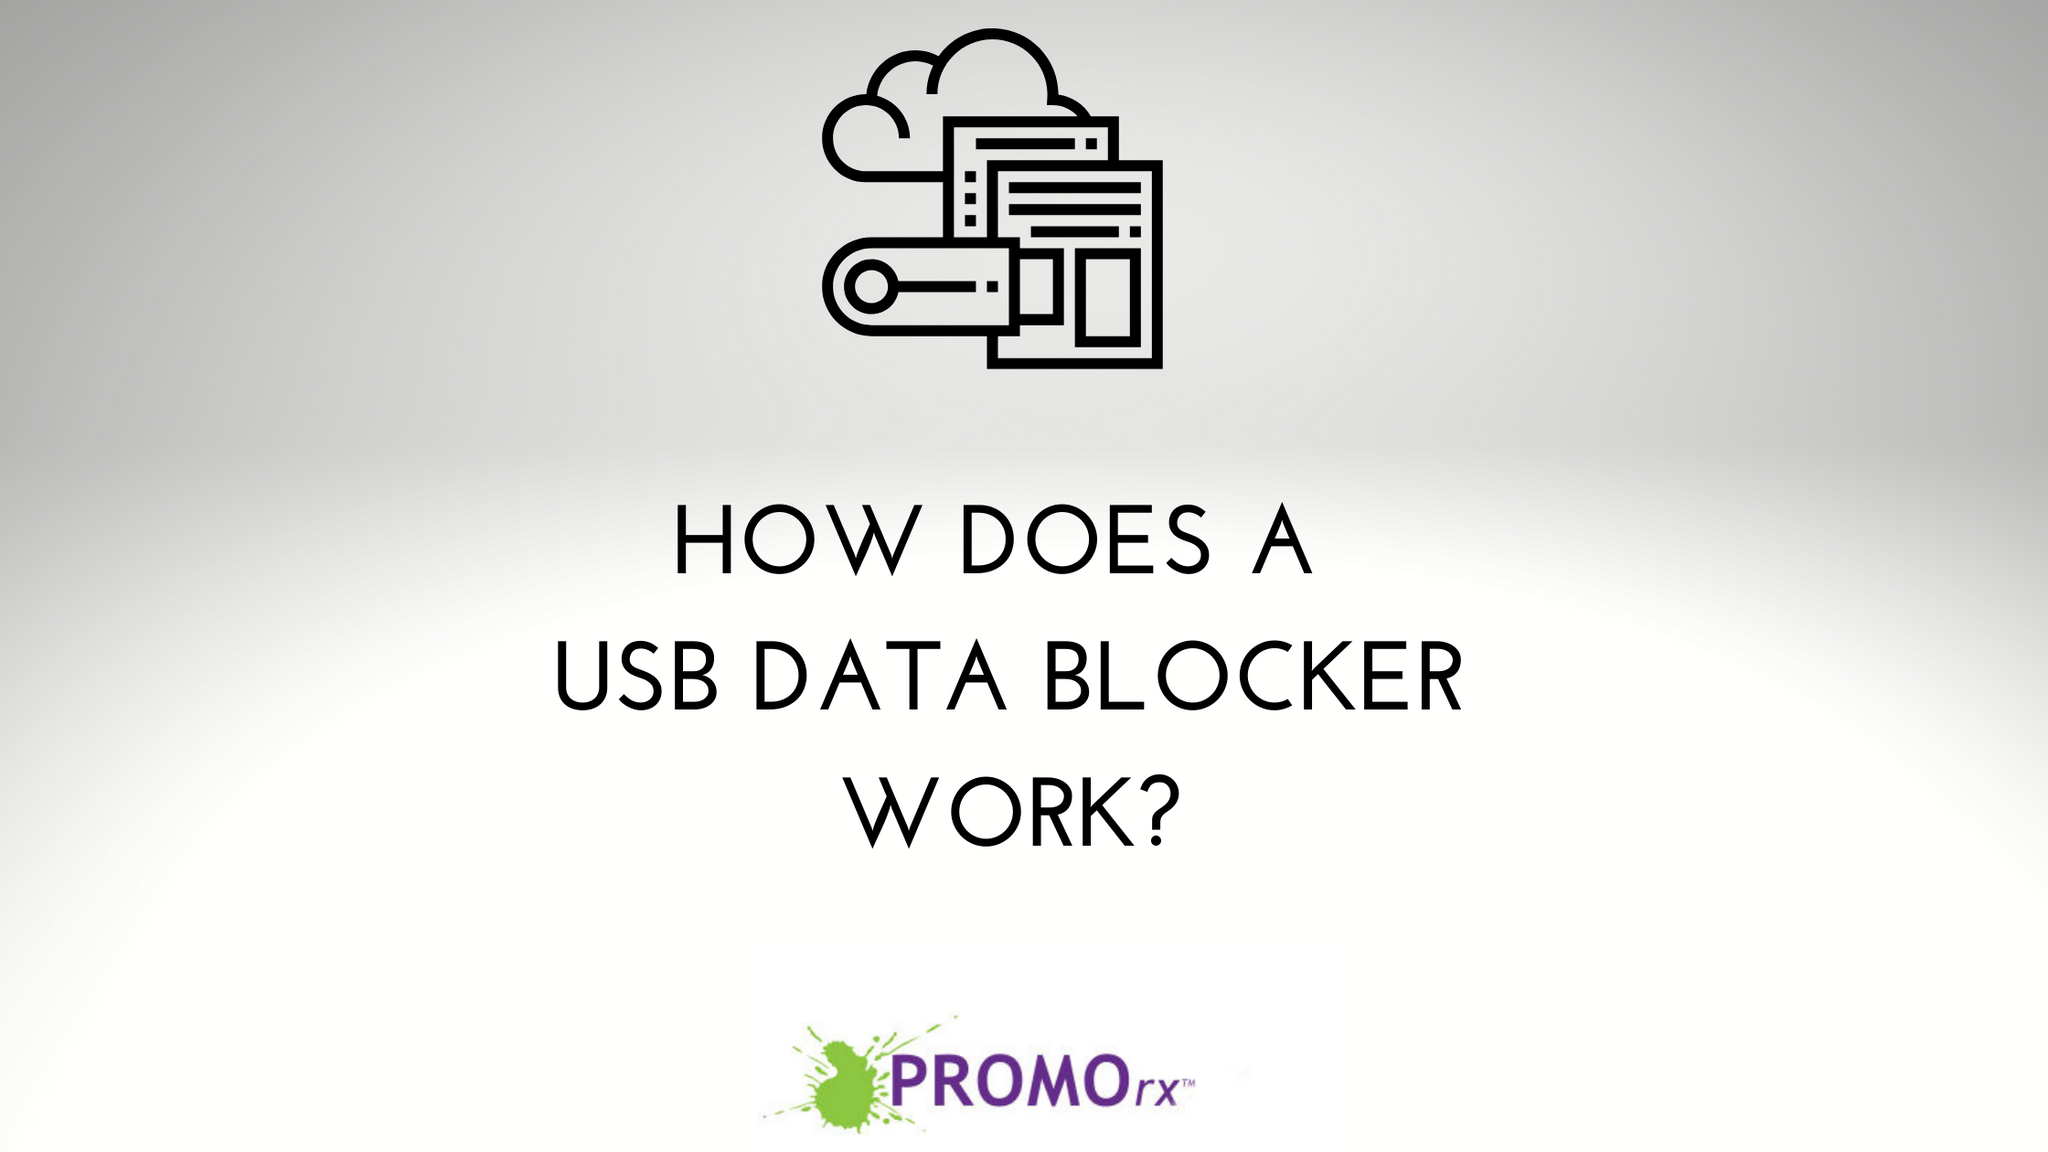 How Does a USB Data Blocker Work?